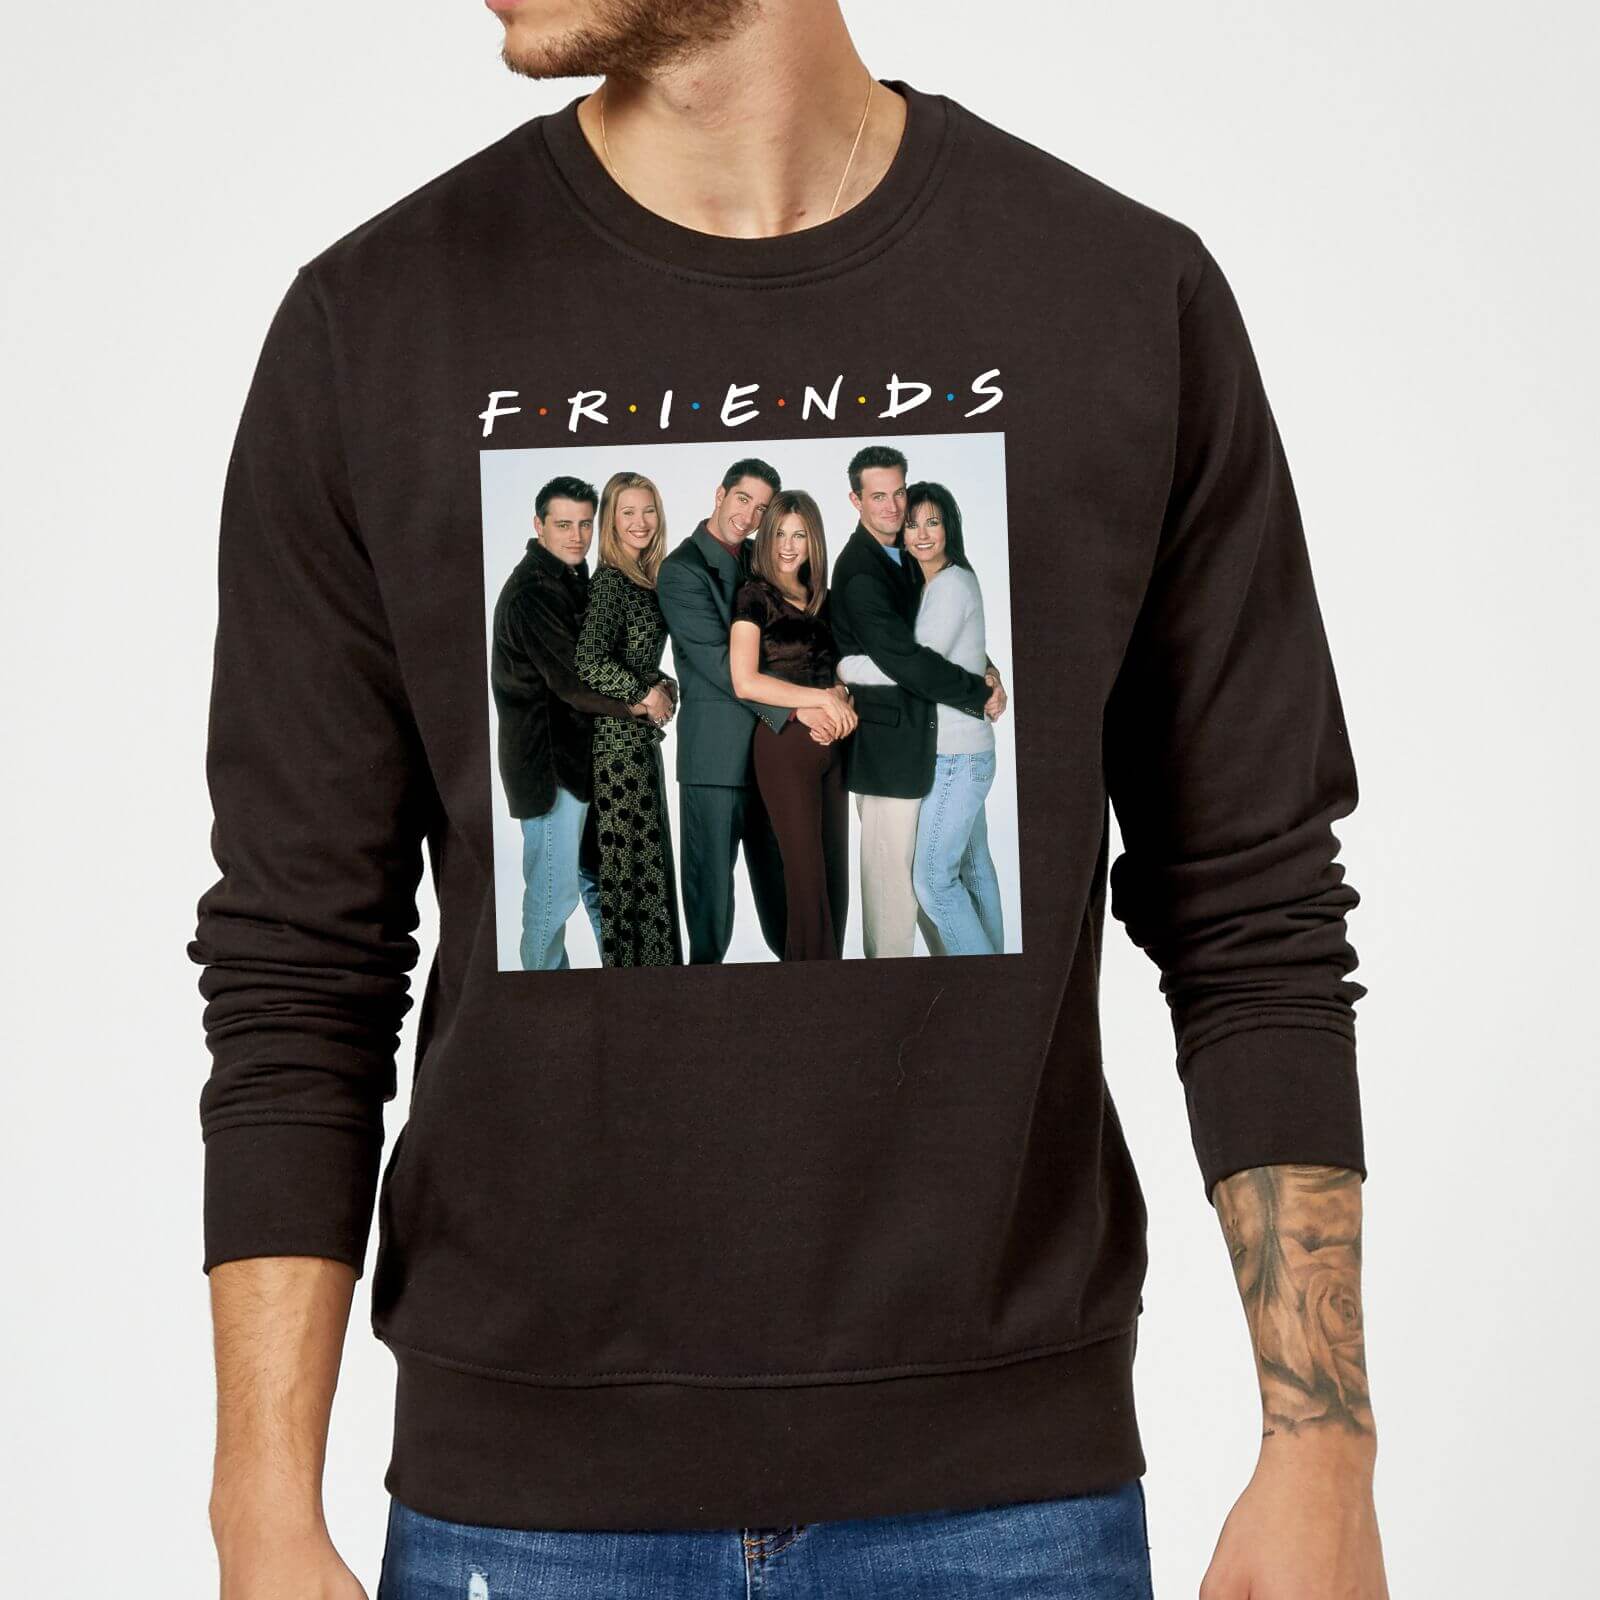 Friends Group Shot Sweatshirt - Black - S - Black